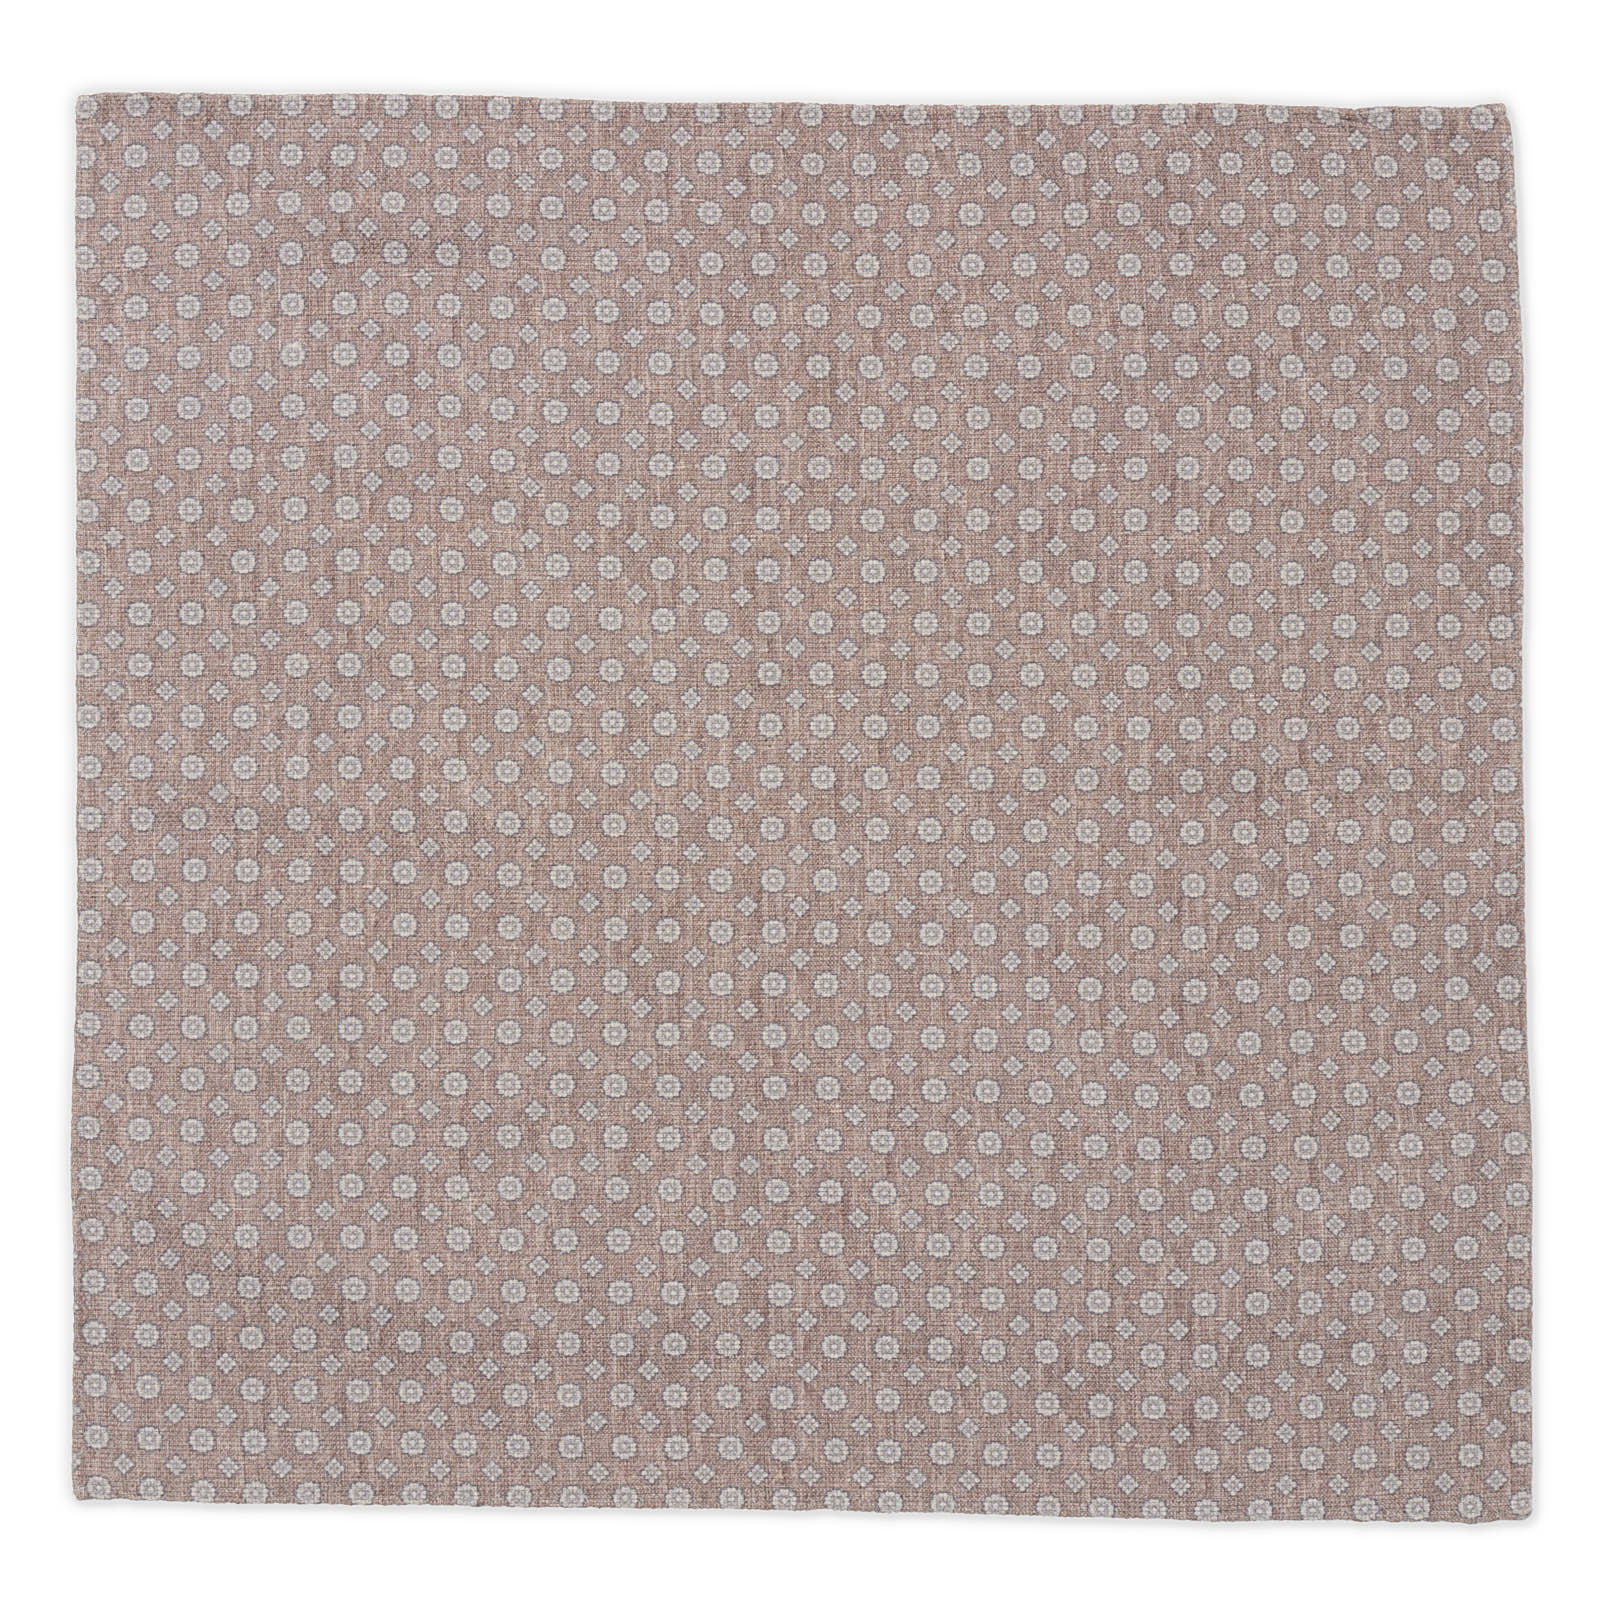 ROSI Handmade Reddish Gray Medallion Cotton-Linen Pocket Square Double Sided